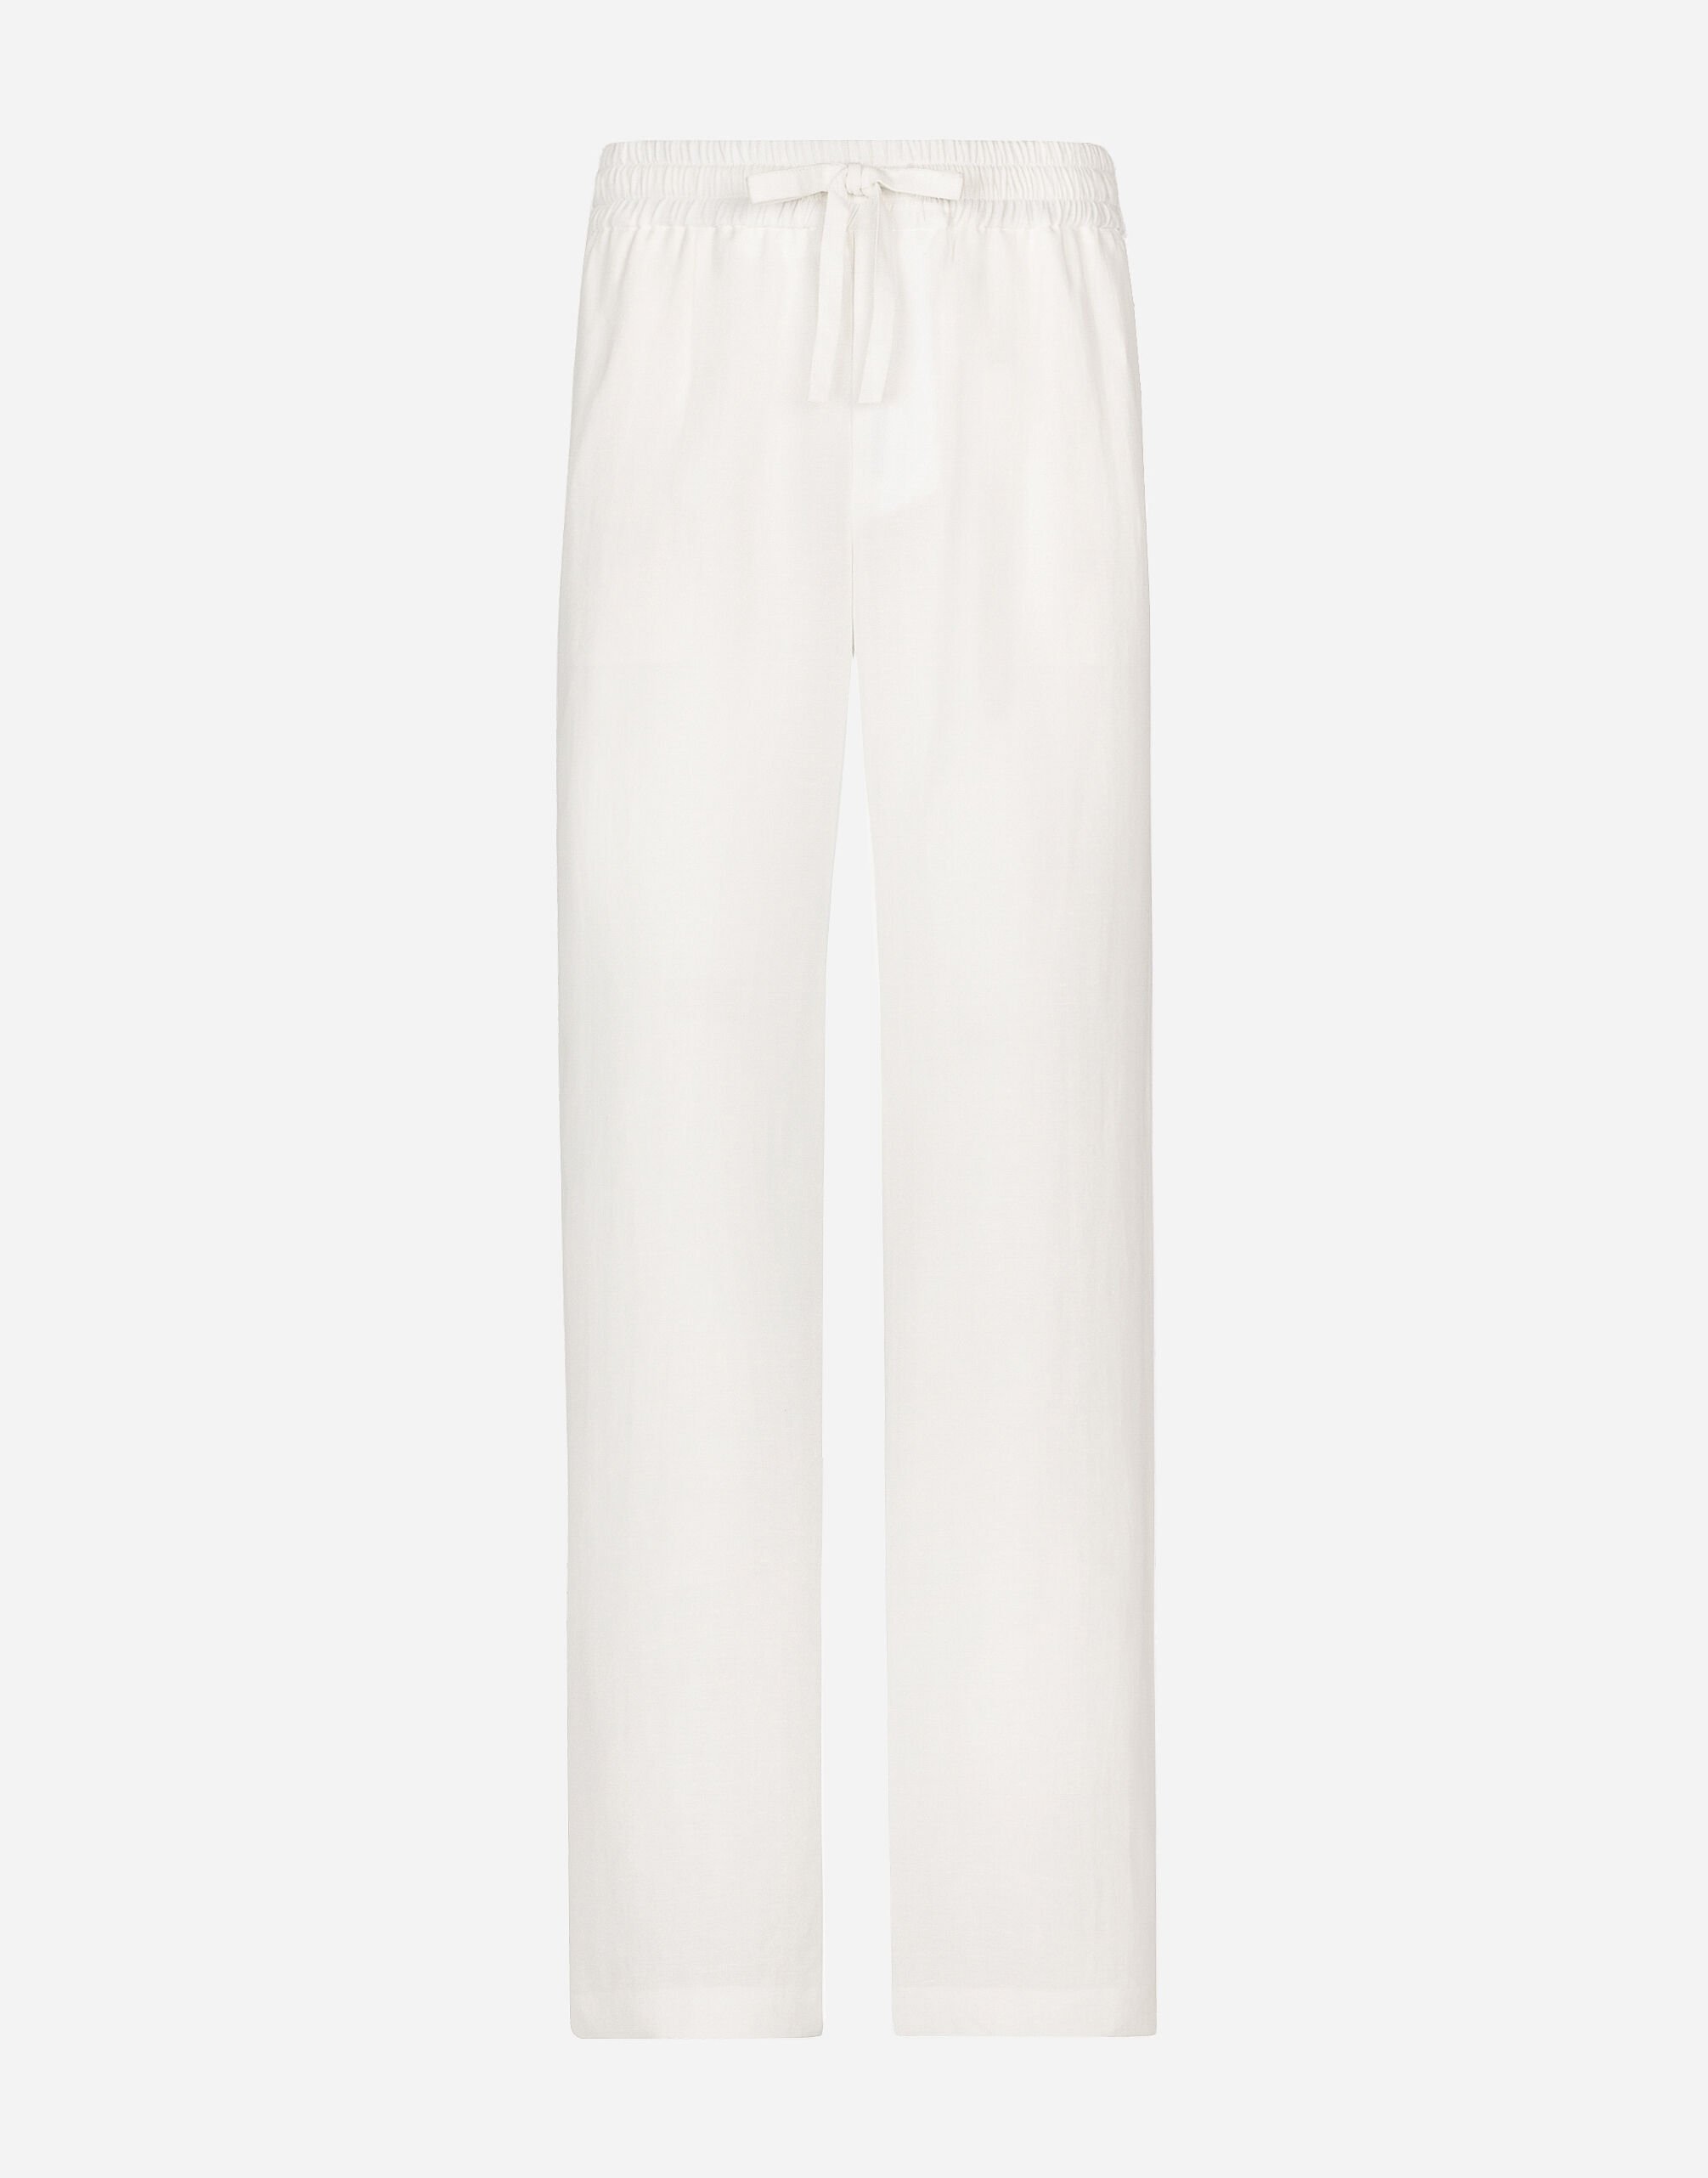 Dolce & Gabbana سروال رياضي من مزيج كتان أبيض VG4444VP287